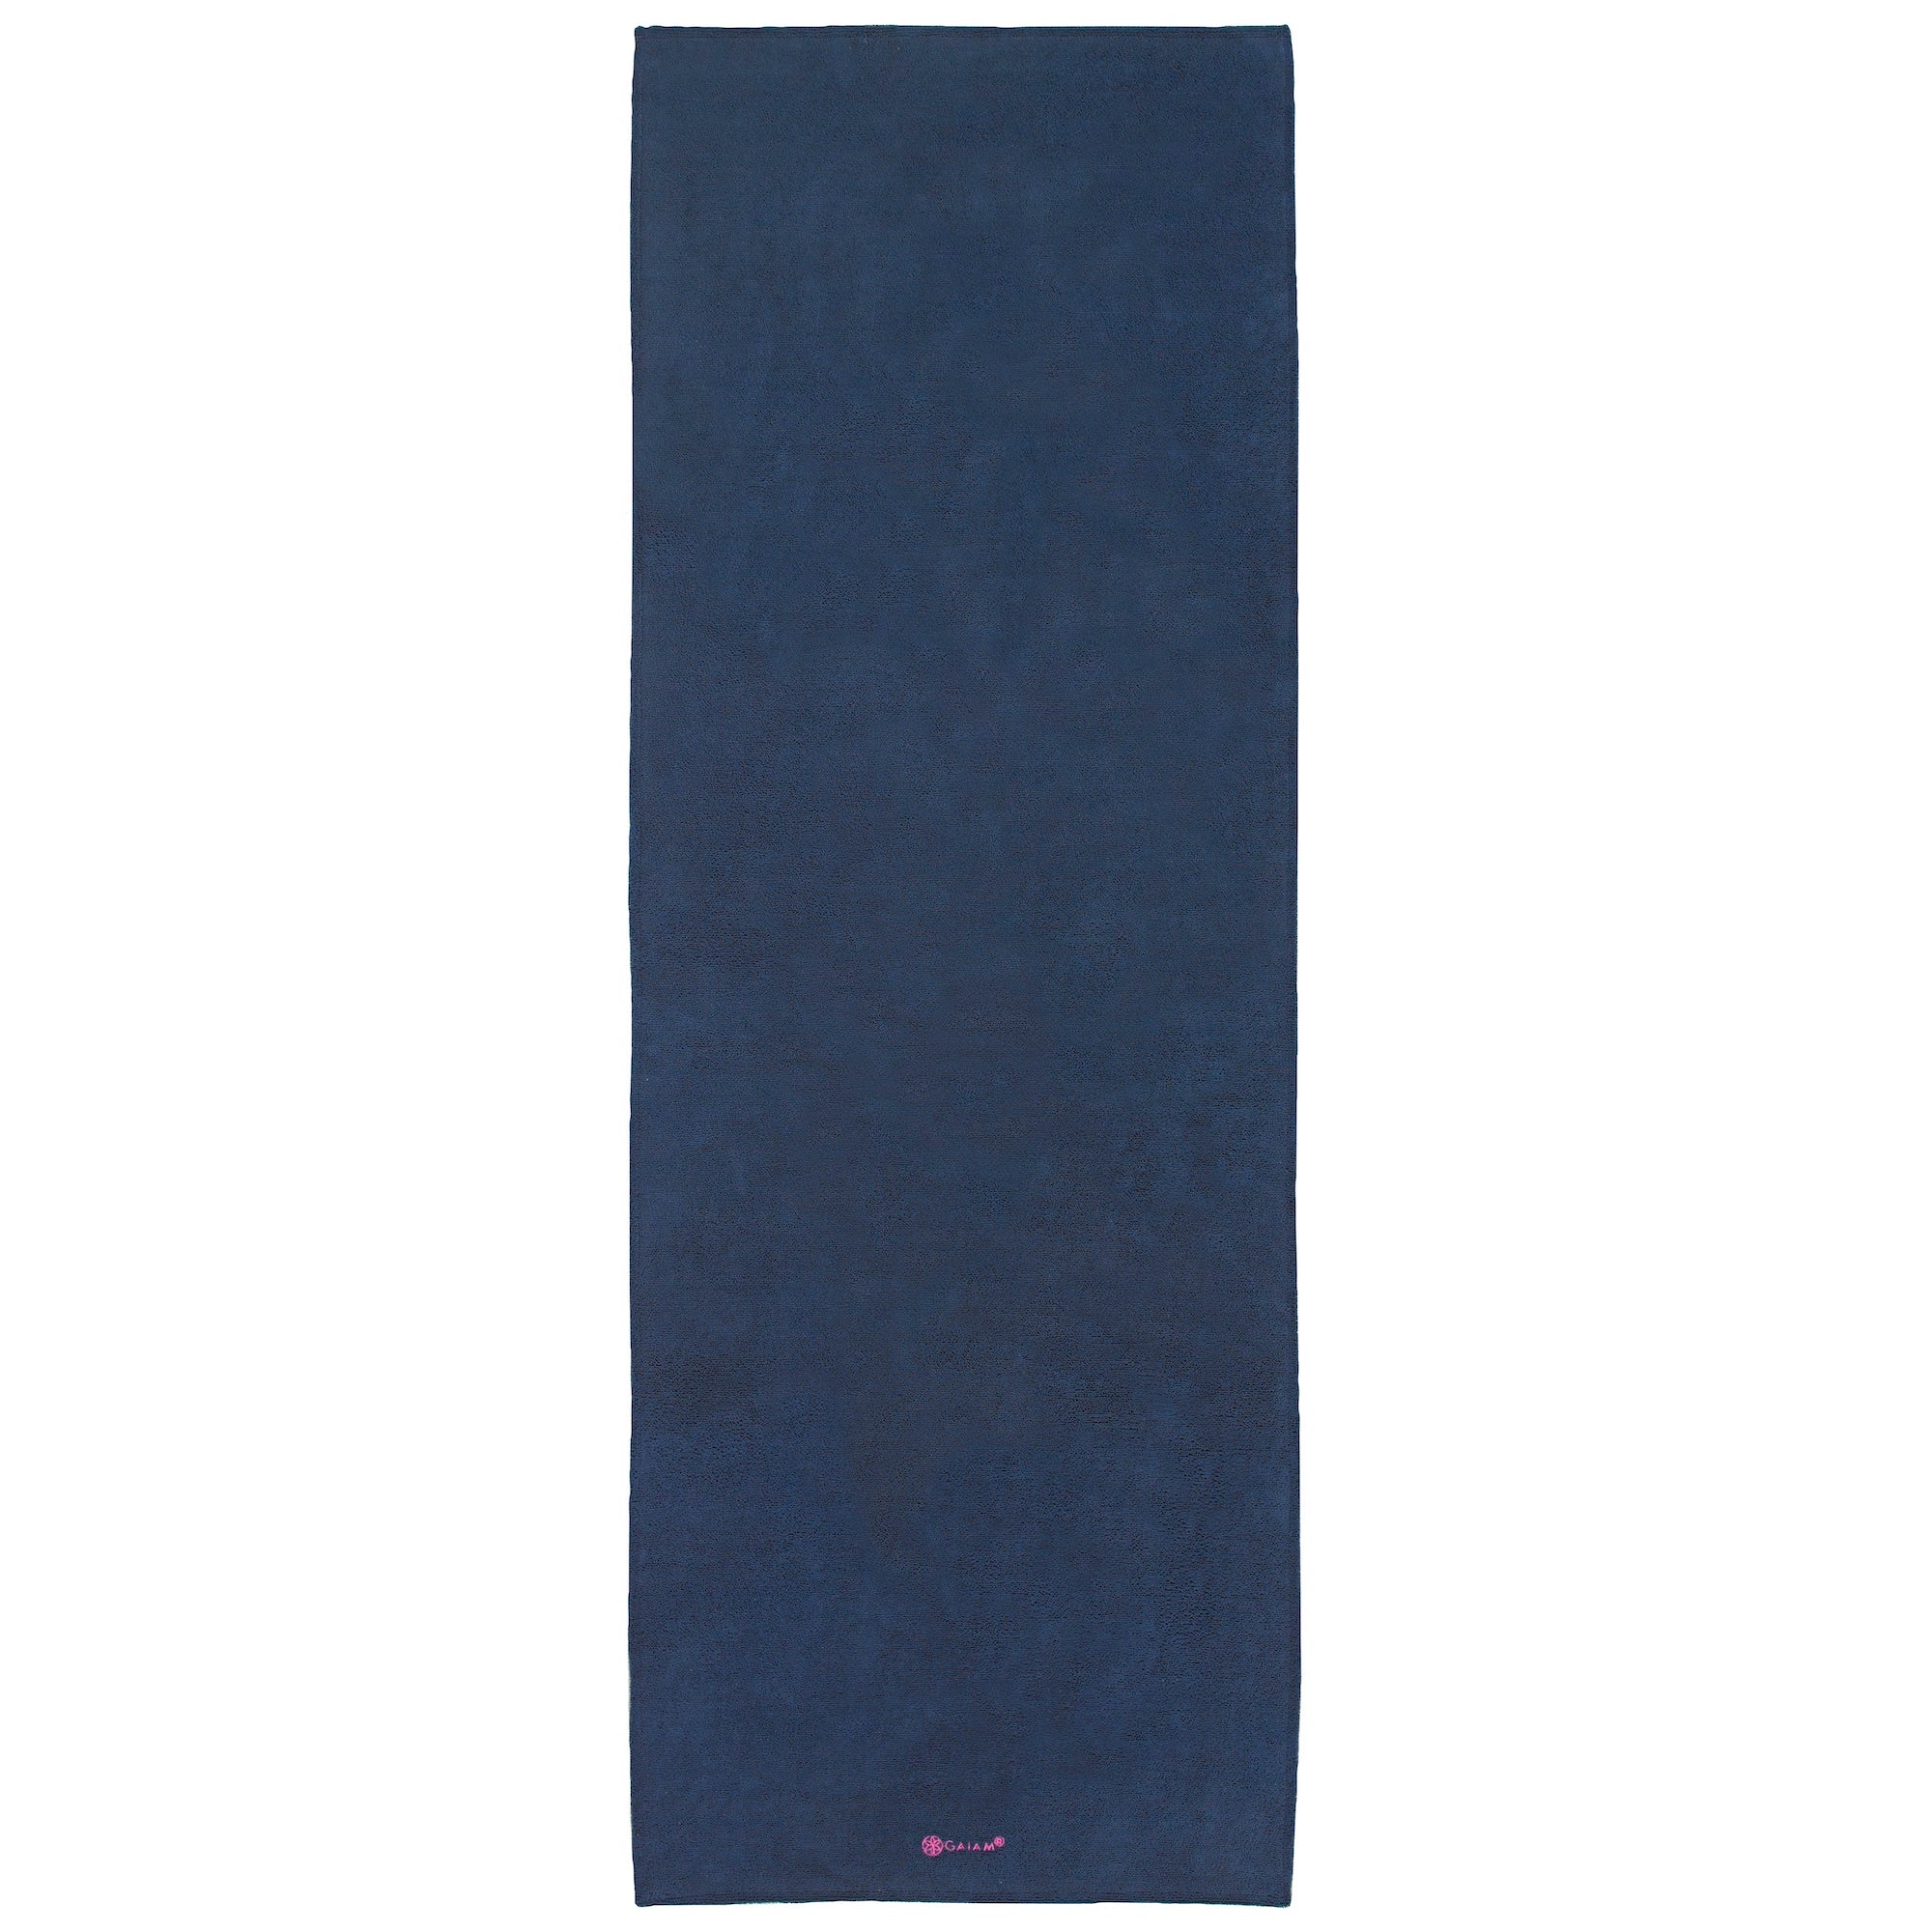 Gaiam Yoga Mat Towel Super Absorbent Full Size 24 x 68 ~ Green & Fuchsia